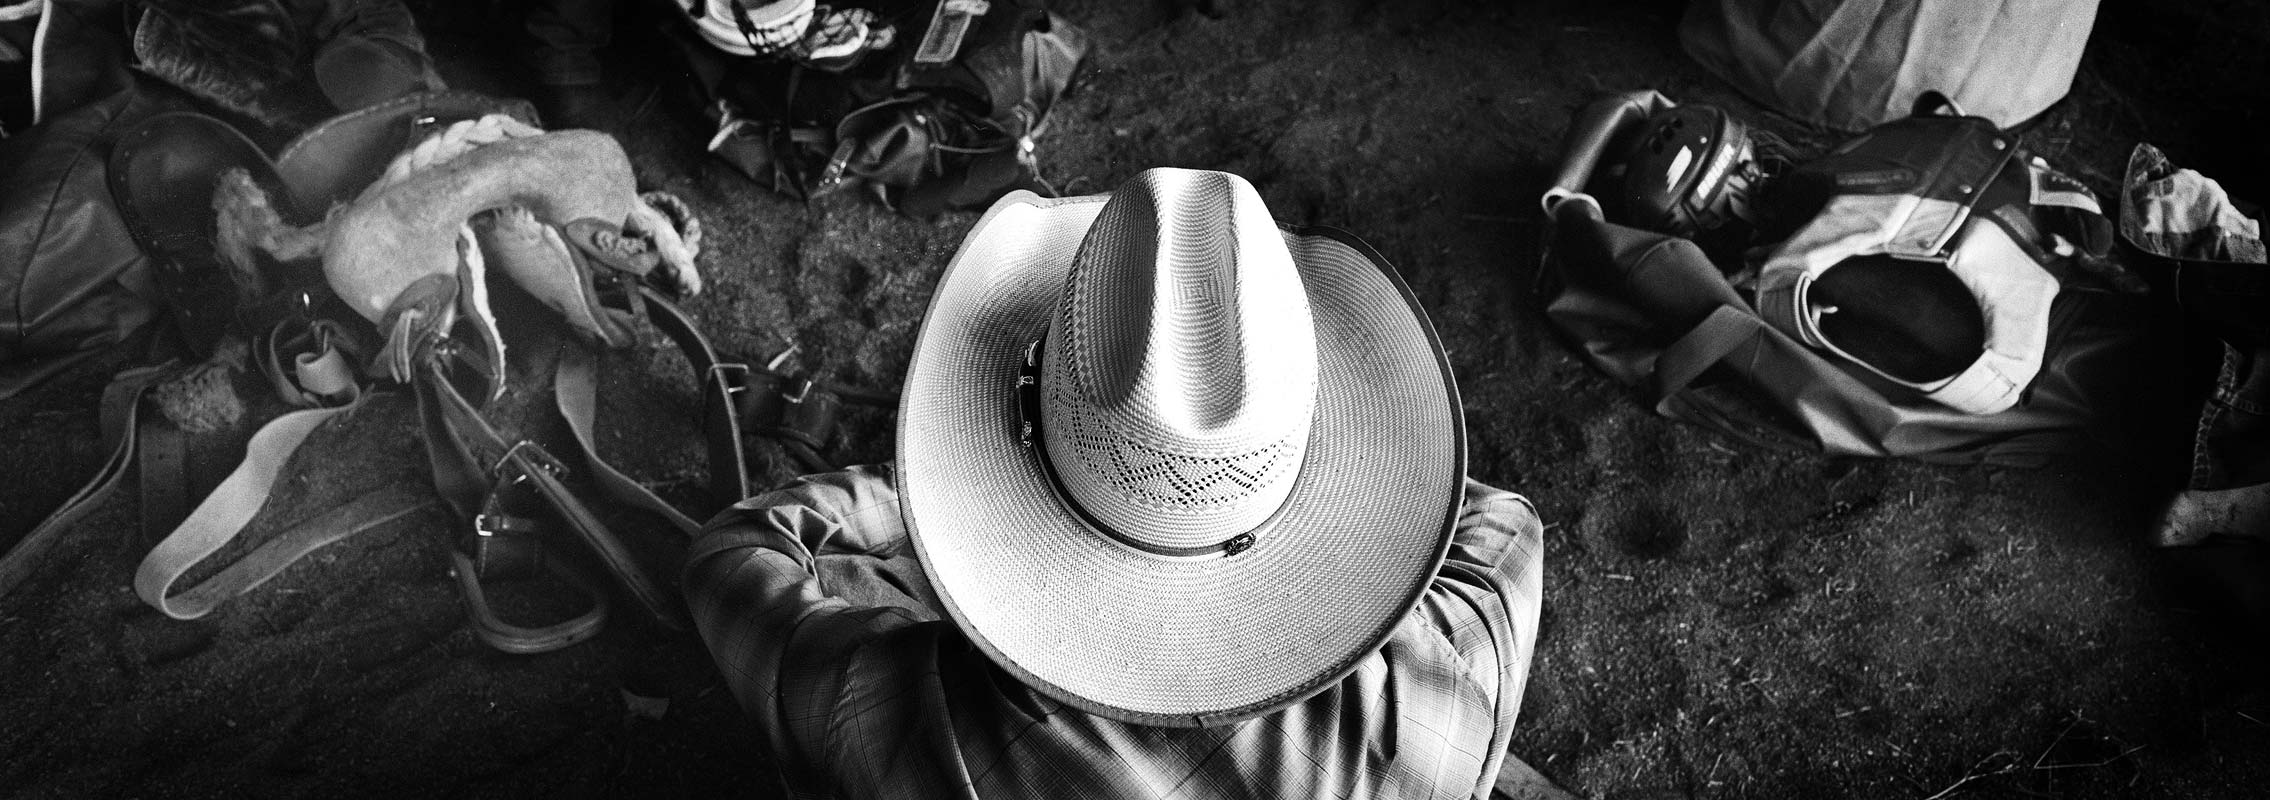 Australian-Rodeo-Cowboys25.jpg